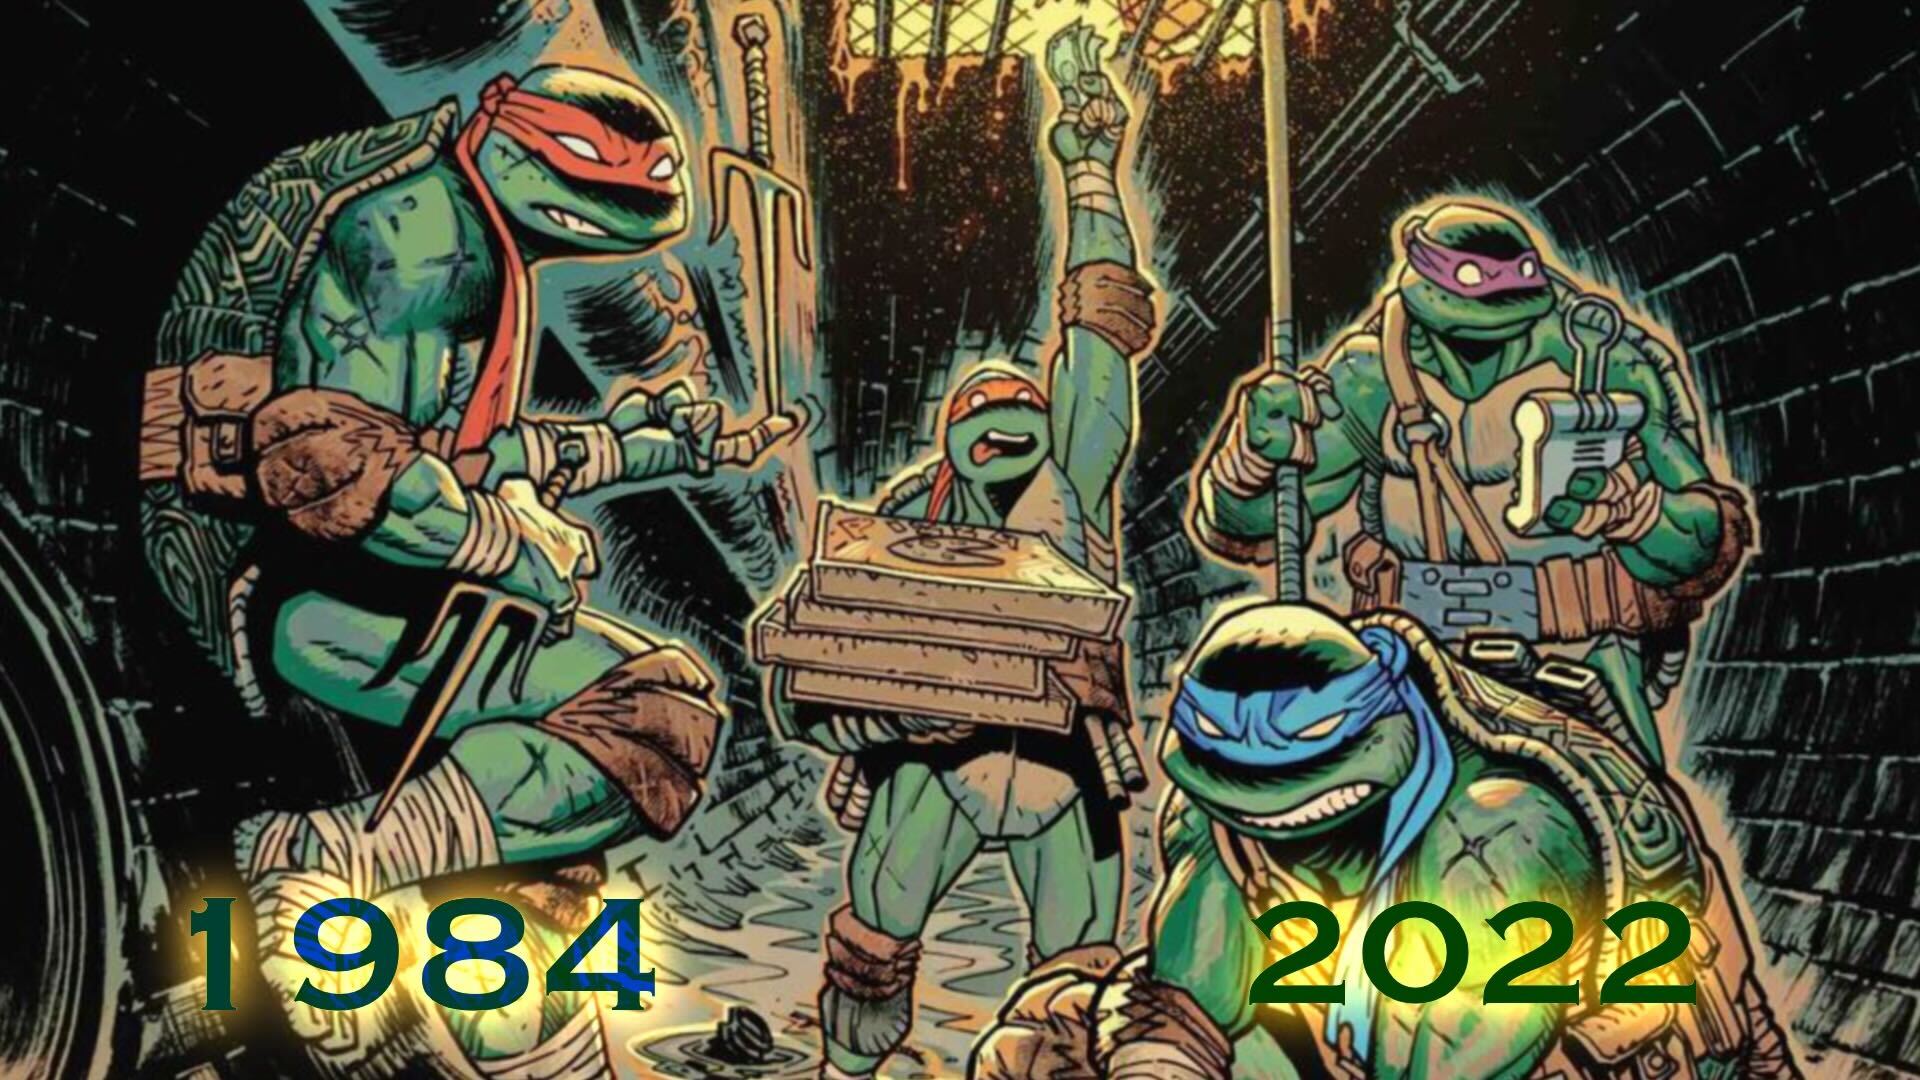 Teenage Mutant Ninja Turtles History (in a Half-Shell) - The New York Times